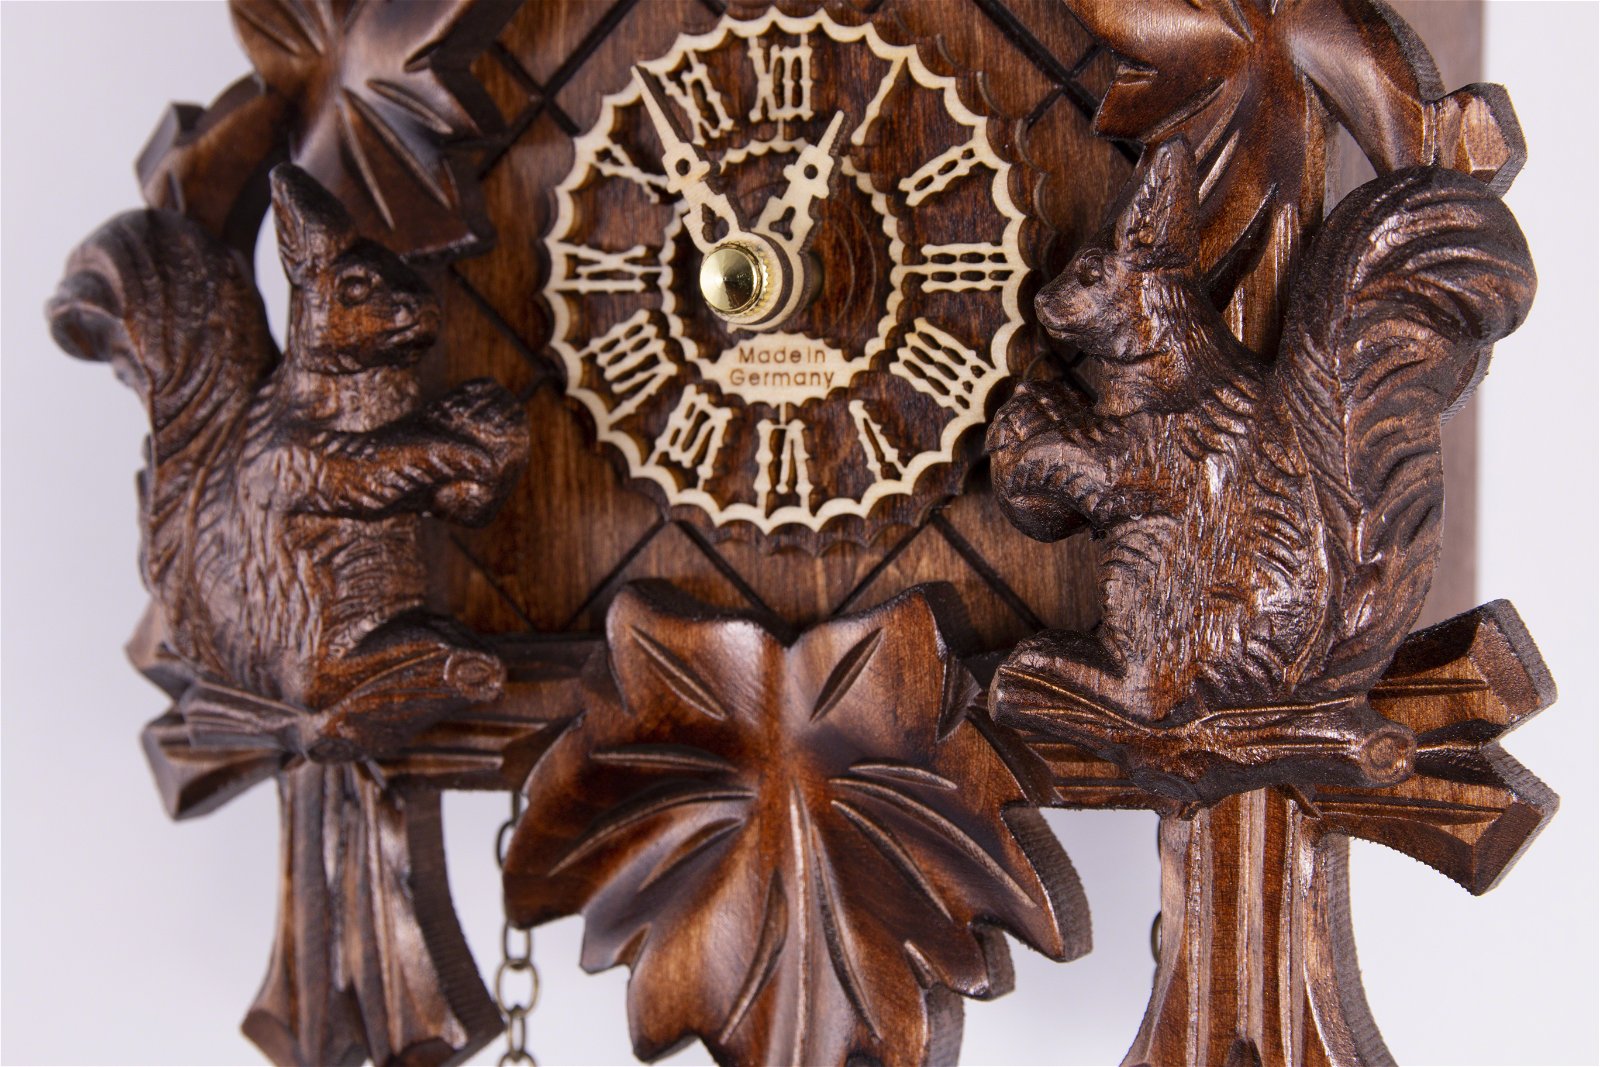 Reloj de cuco estilo “Madera tallada” de cuarzo 24cm de Trenkle Uhren